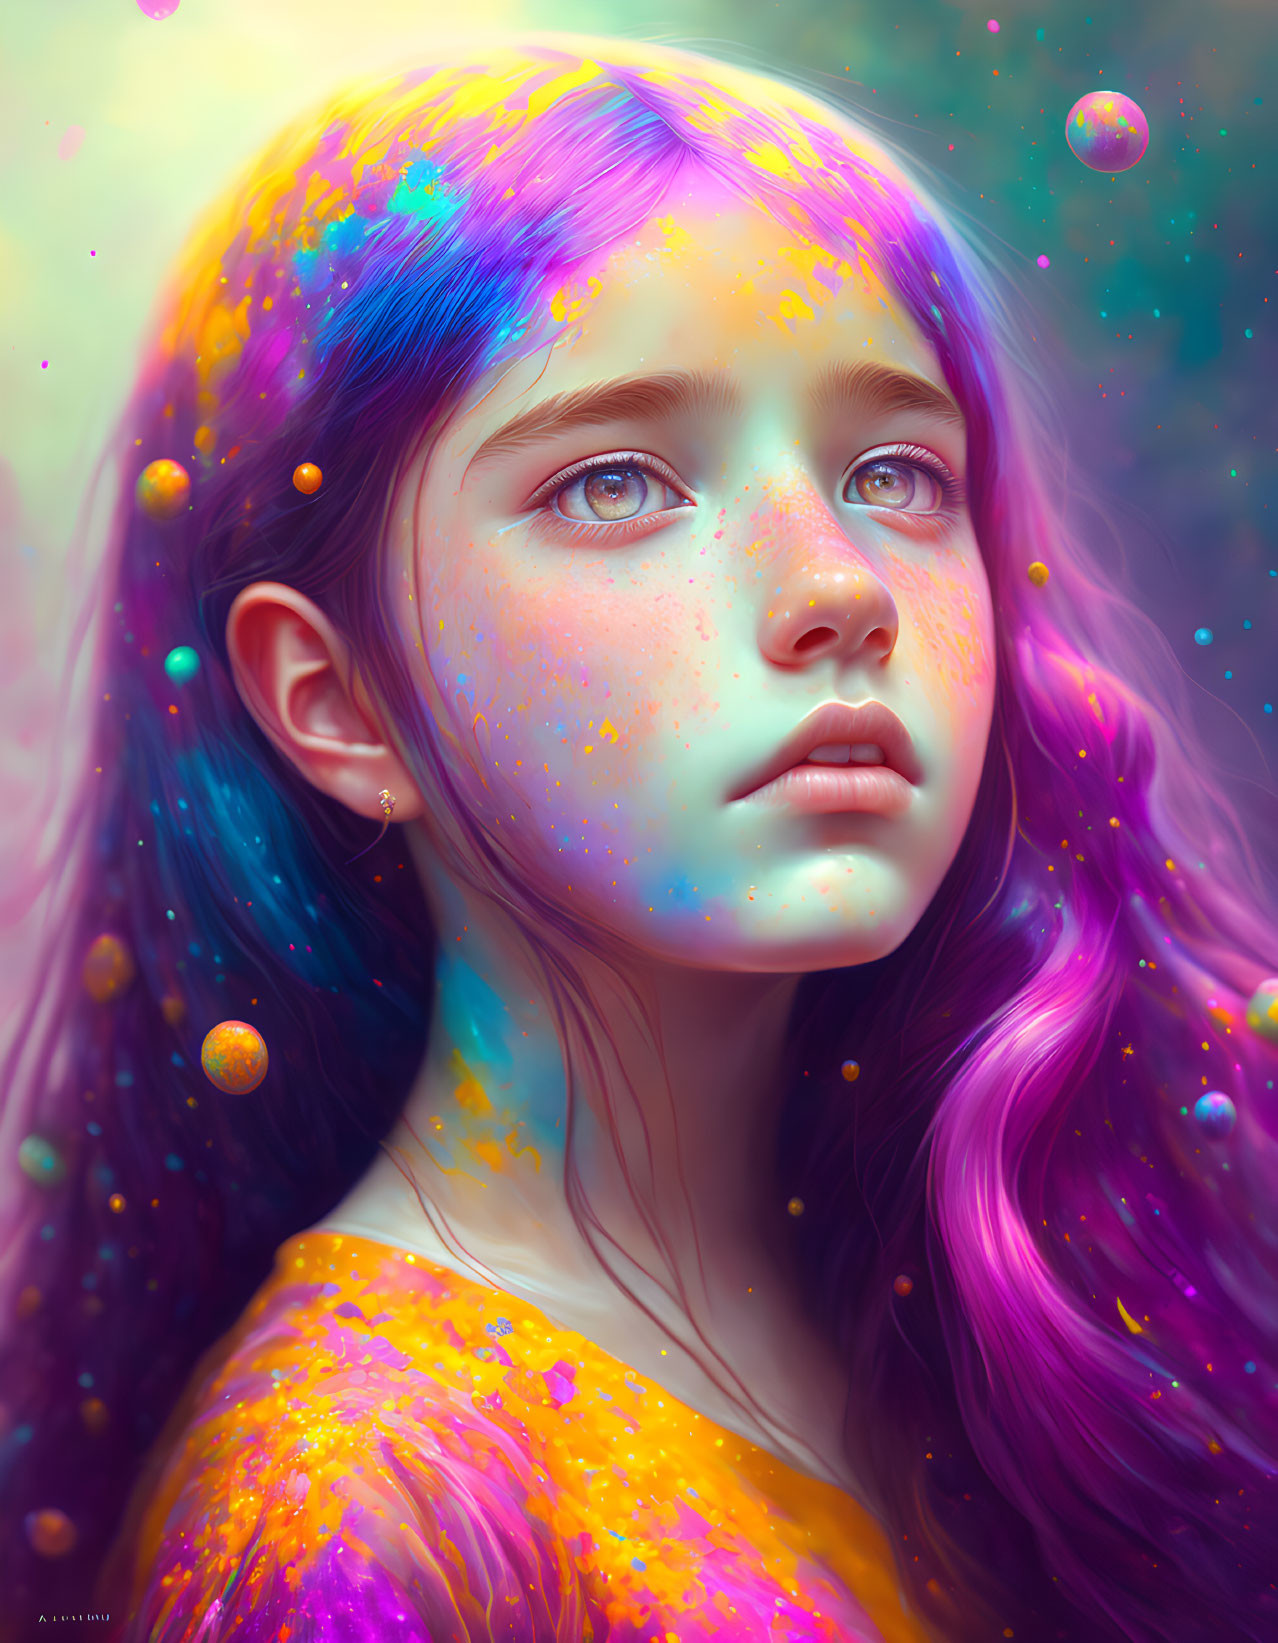 Vibrant purple-haired girl in dreamy digital portrait